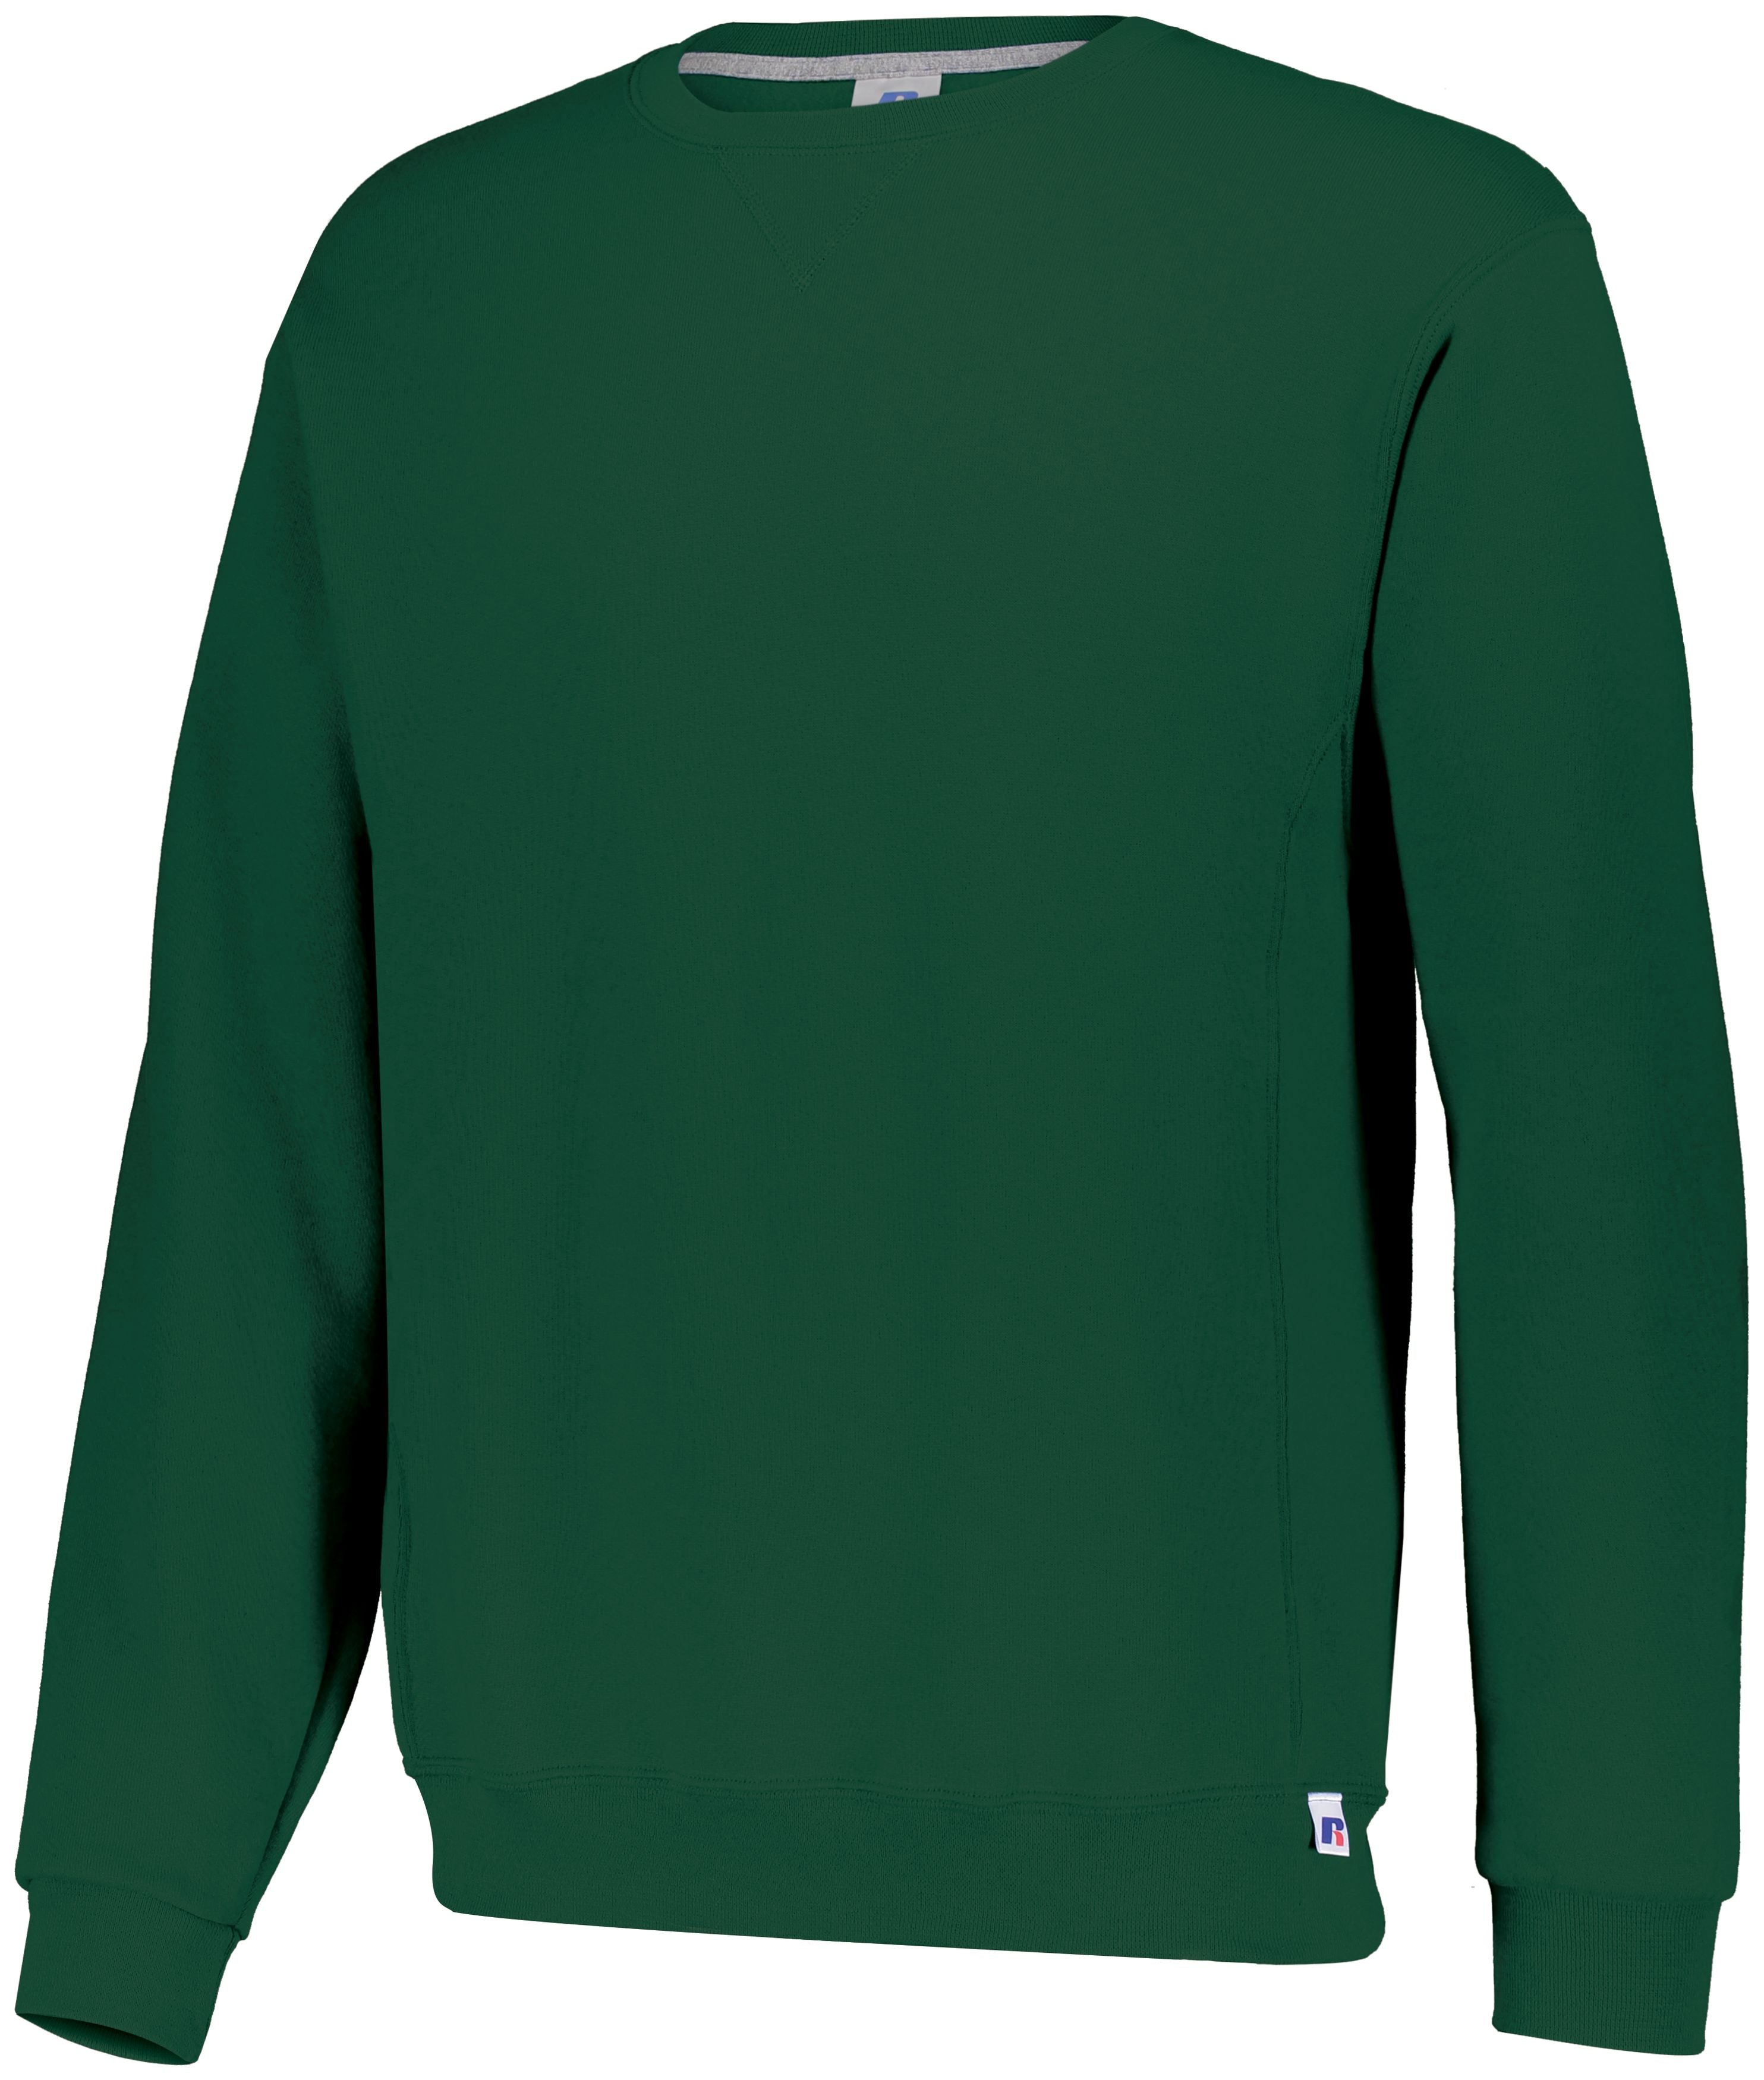 Russell Athletic Dri-Power  Fleece Crew Sweatshirt in Dark Green  -Part of the Adult, Adult-Sweatshirt, Russell-Athletic-Products, Outerwear product lines at KanaleyCreations.com